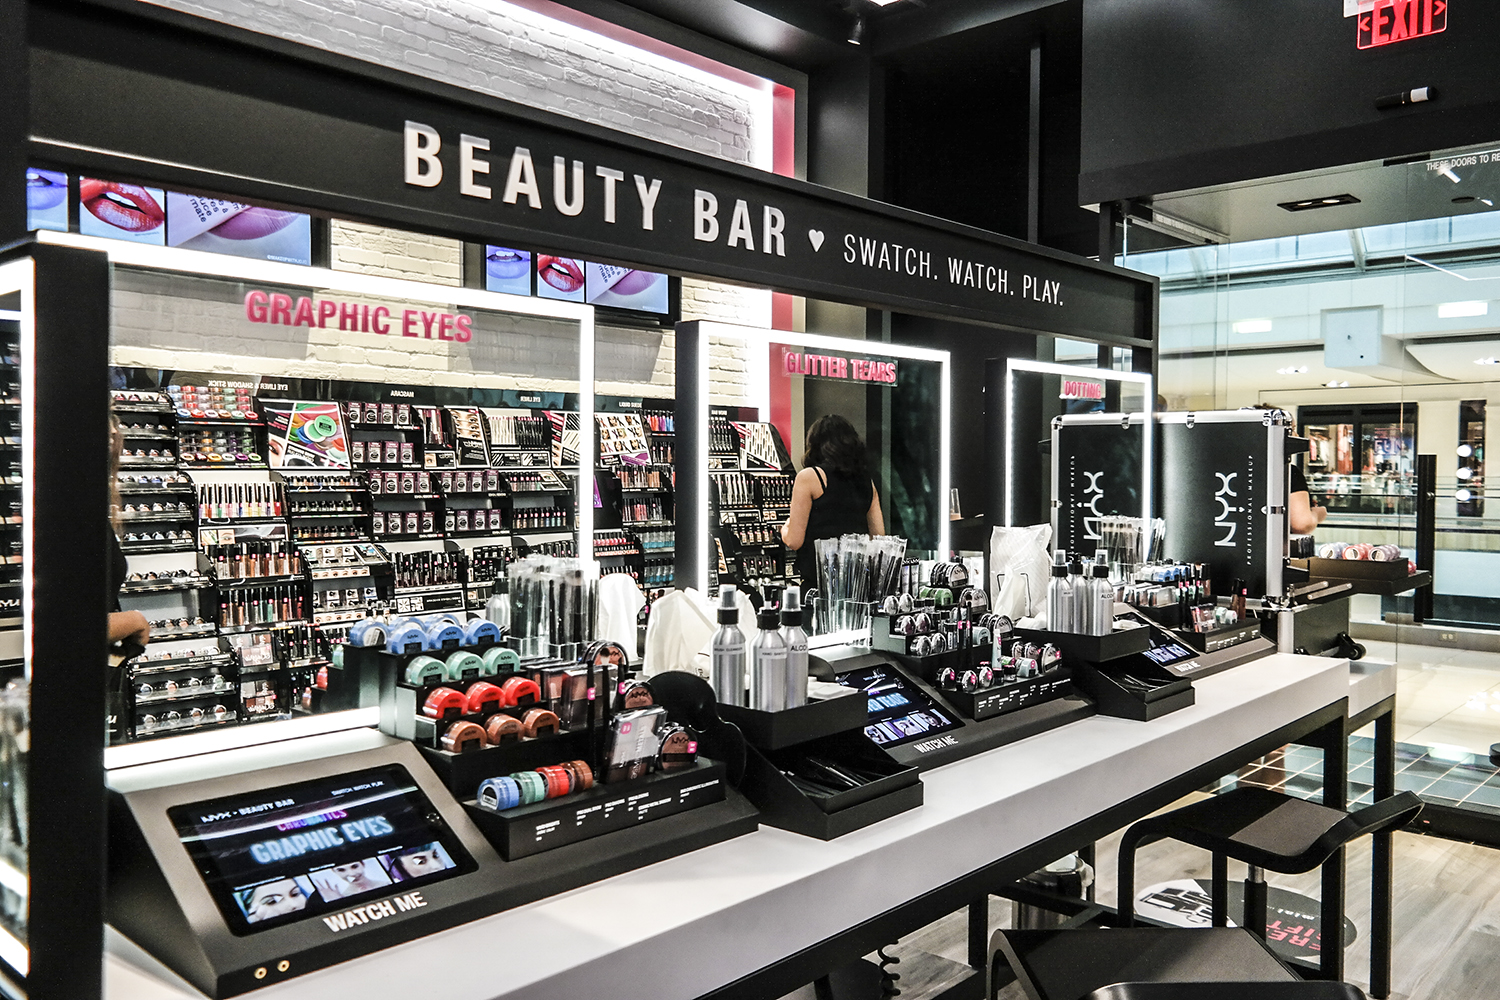 NYX Professional Make-Up Sneak Peek at Galleria Mall! - Lipstick